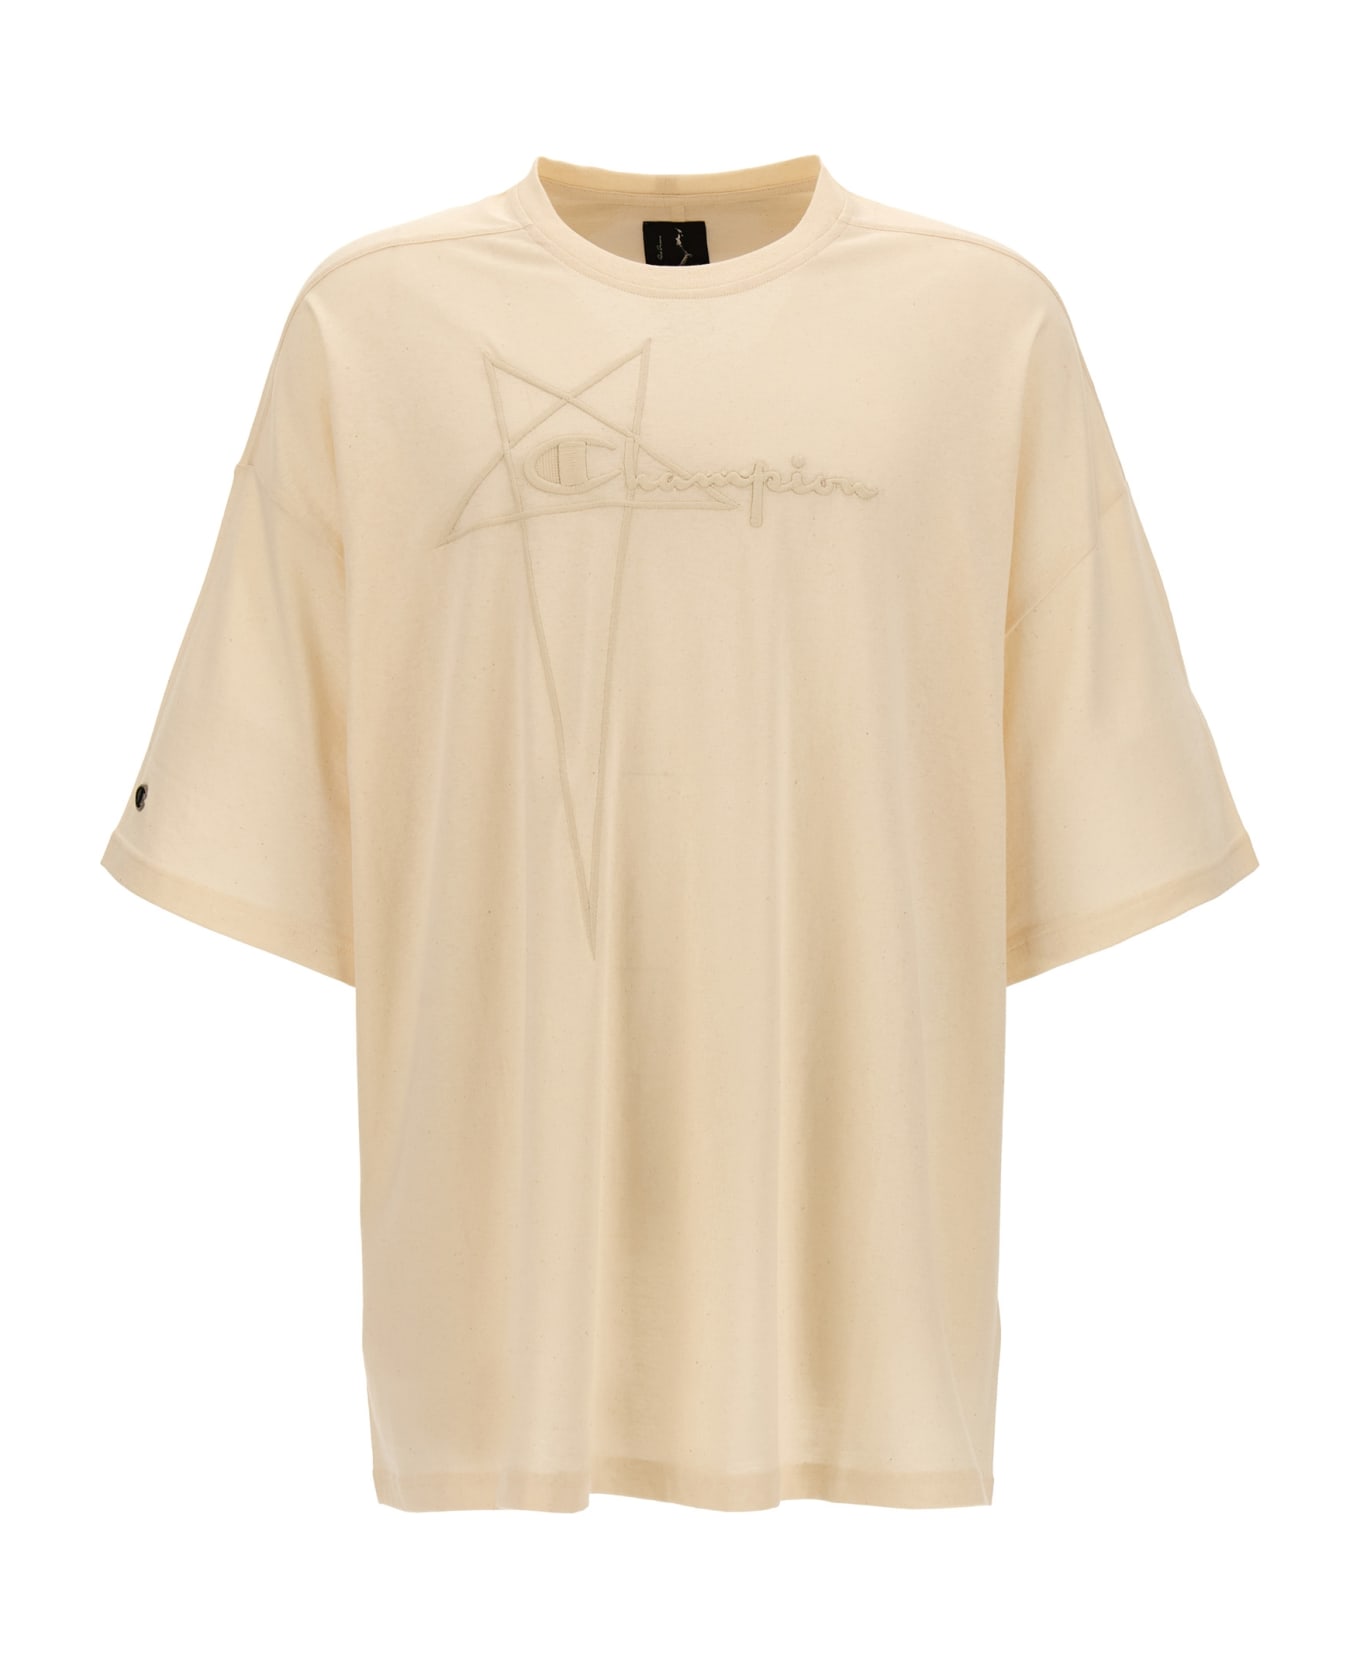 Rick Owens X Champion 'tommy T' T-shirt - Beige